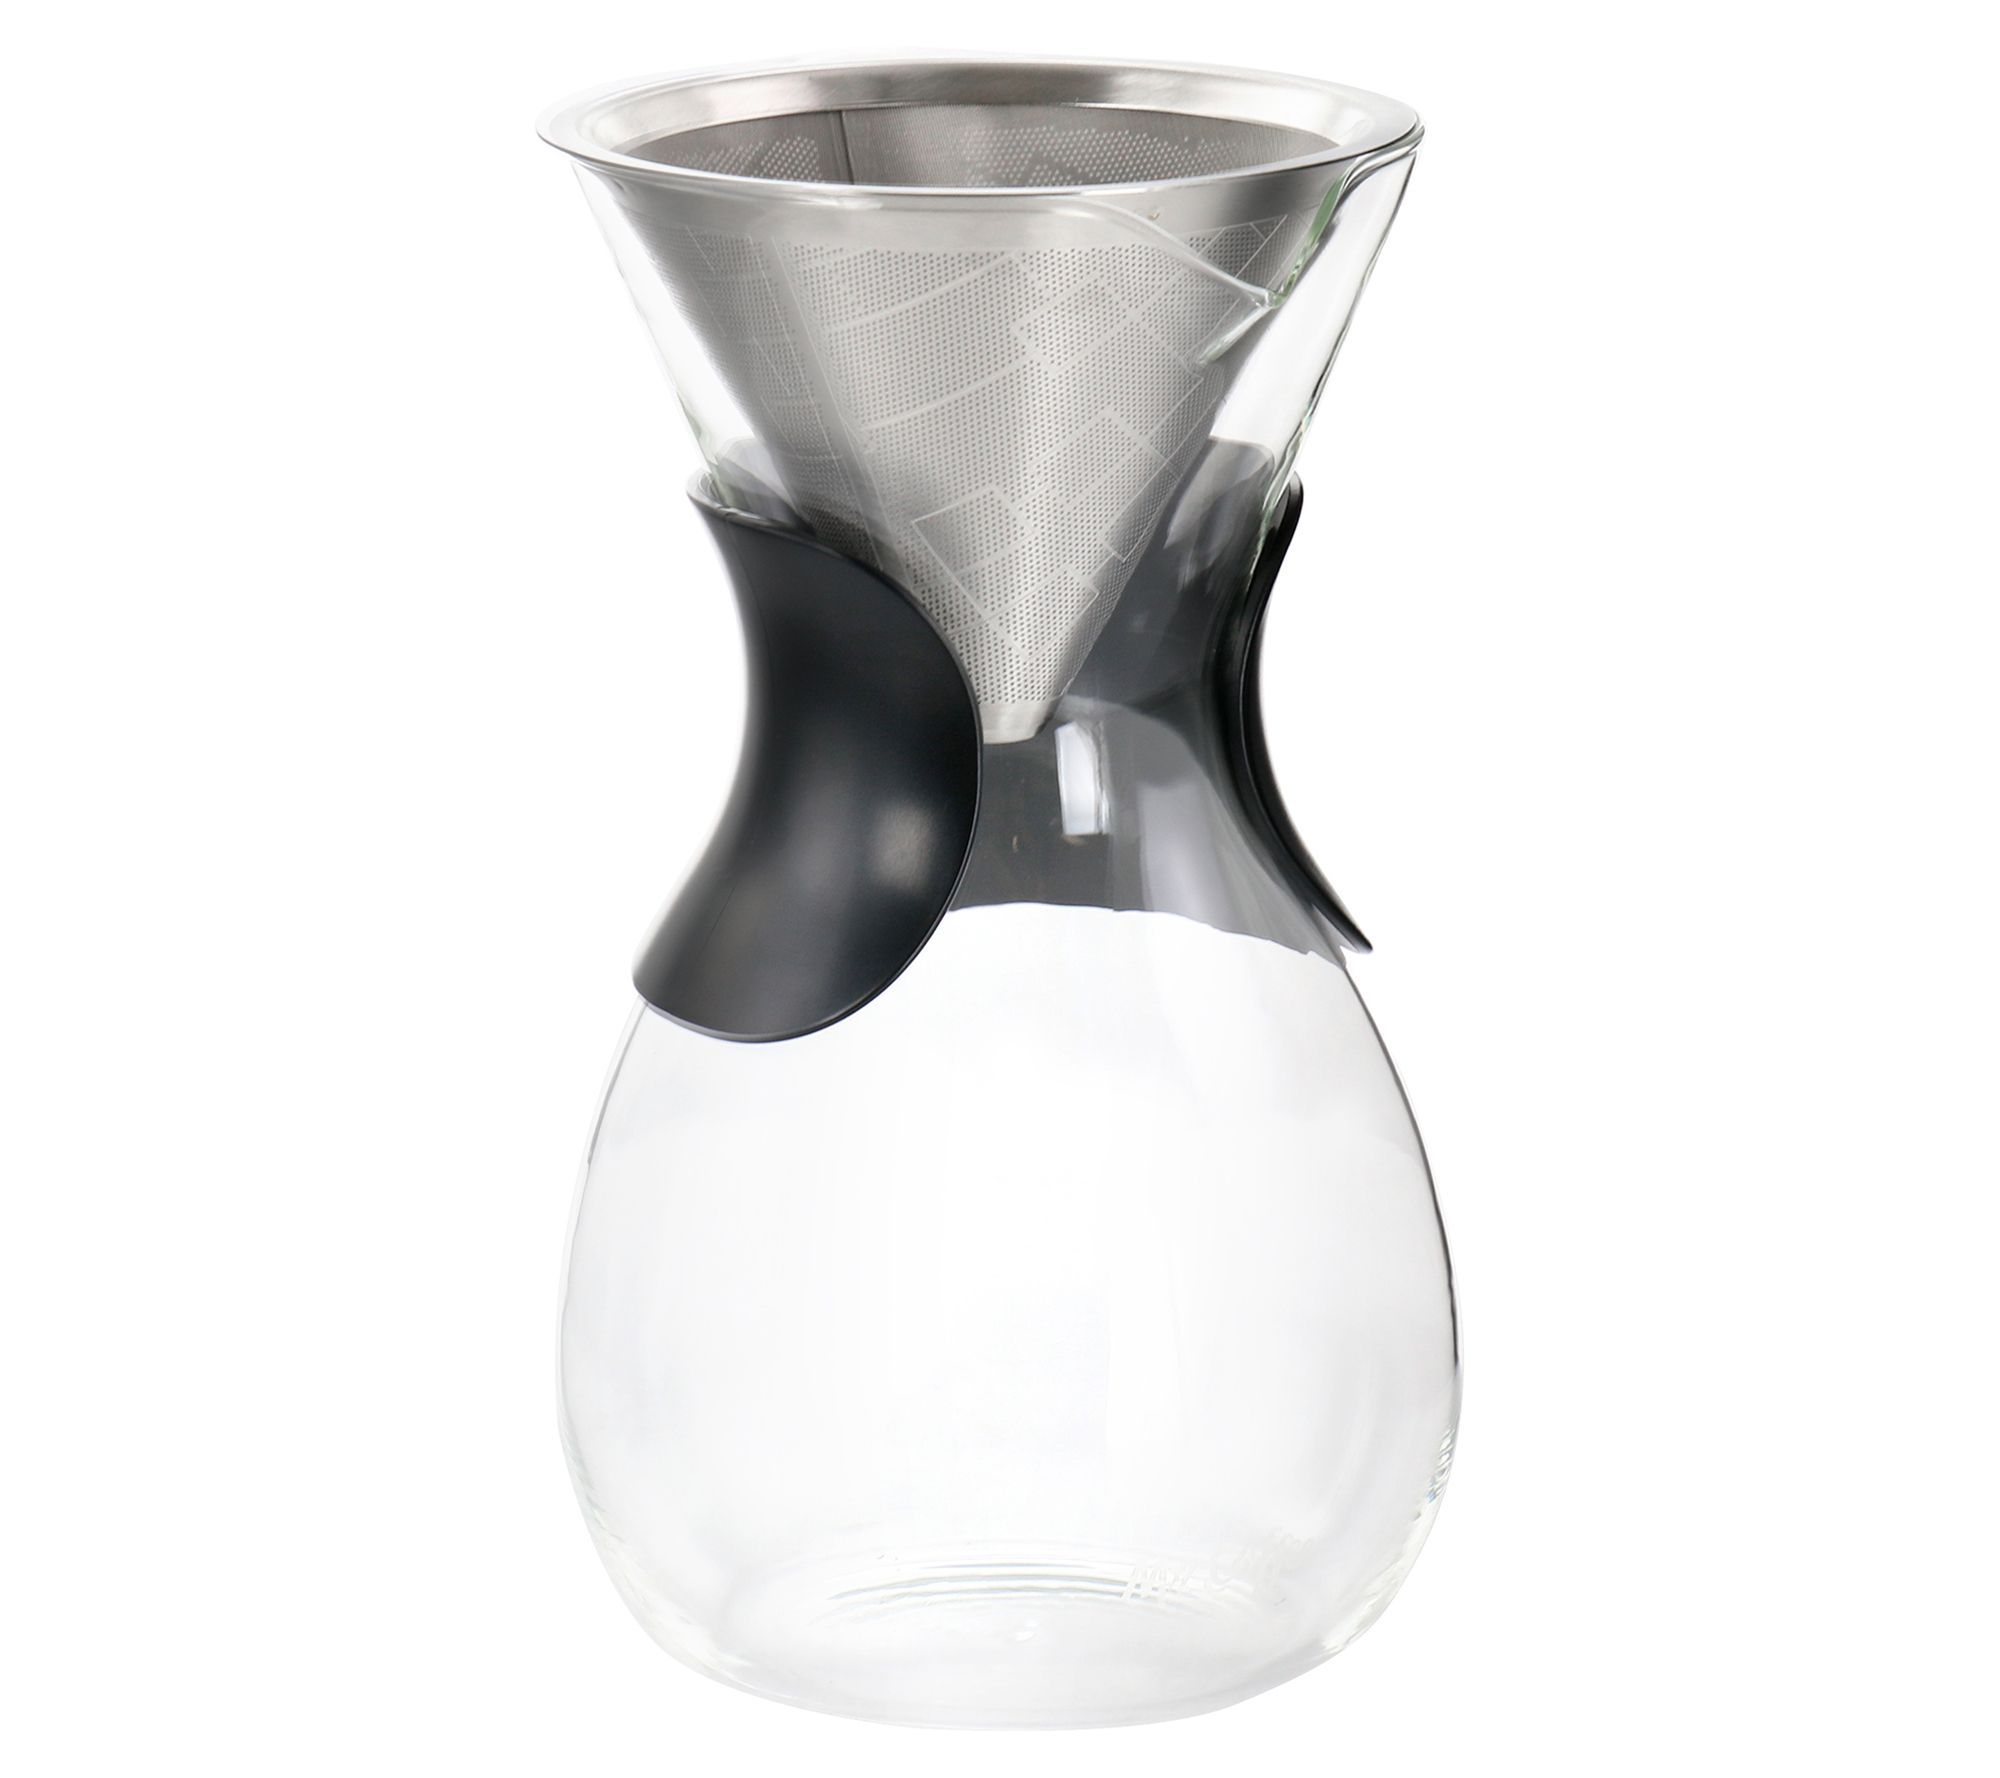 London Sip Glass Pour Over Carafe & Reusable Filter